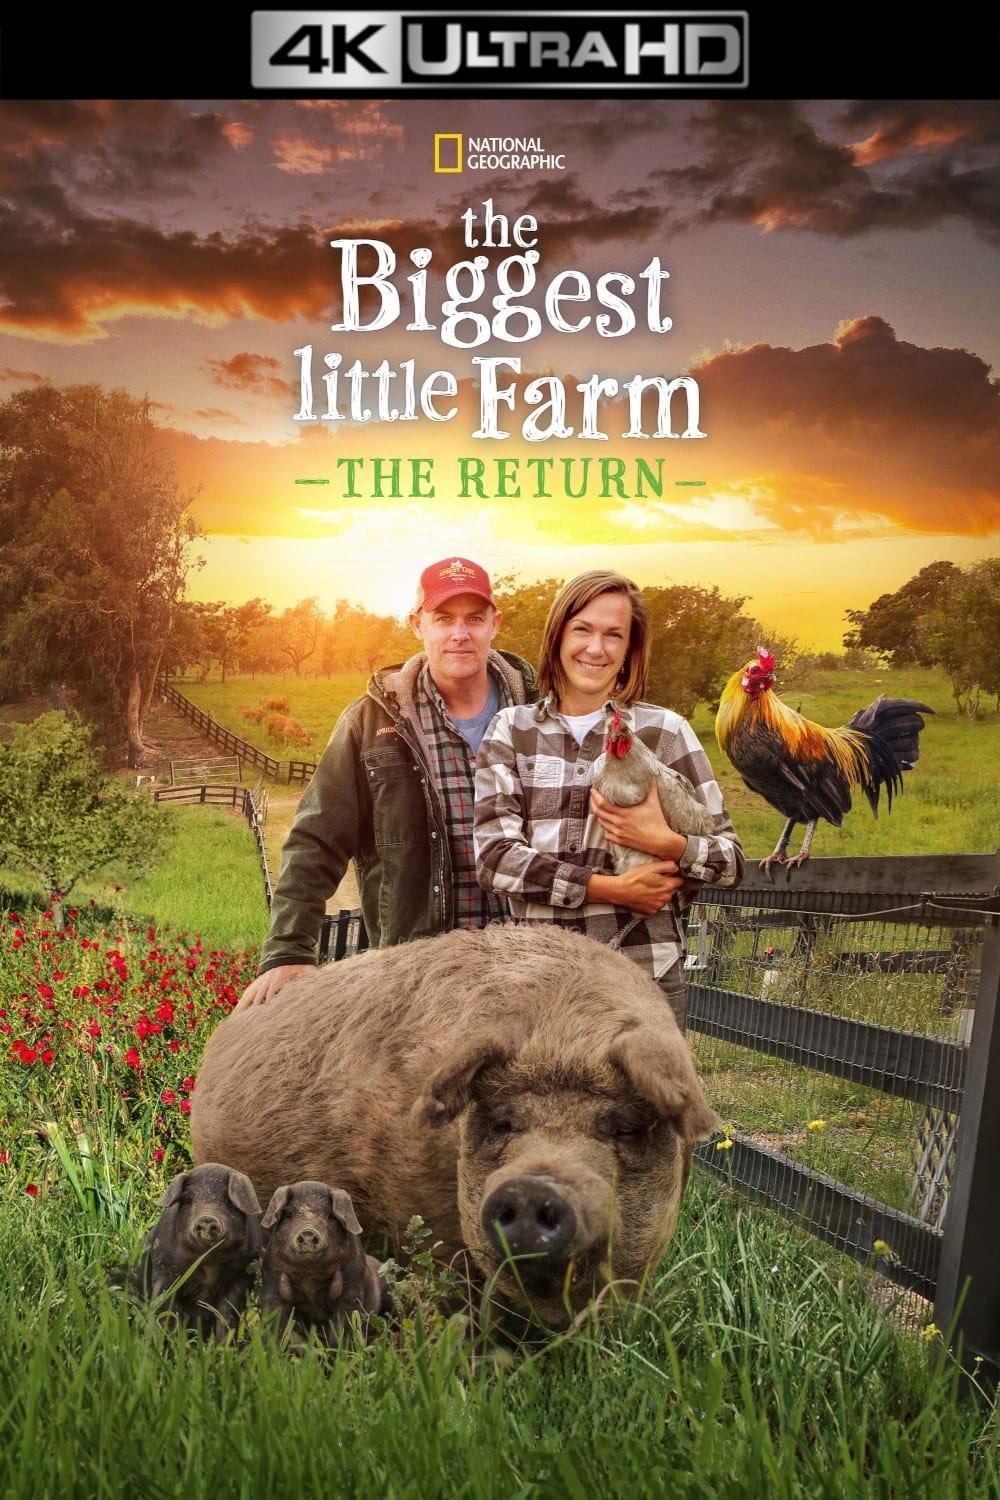 The Biggest Little Farm: The Return poster